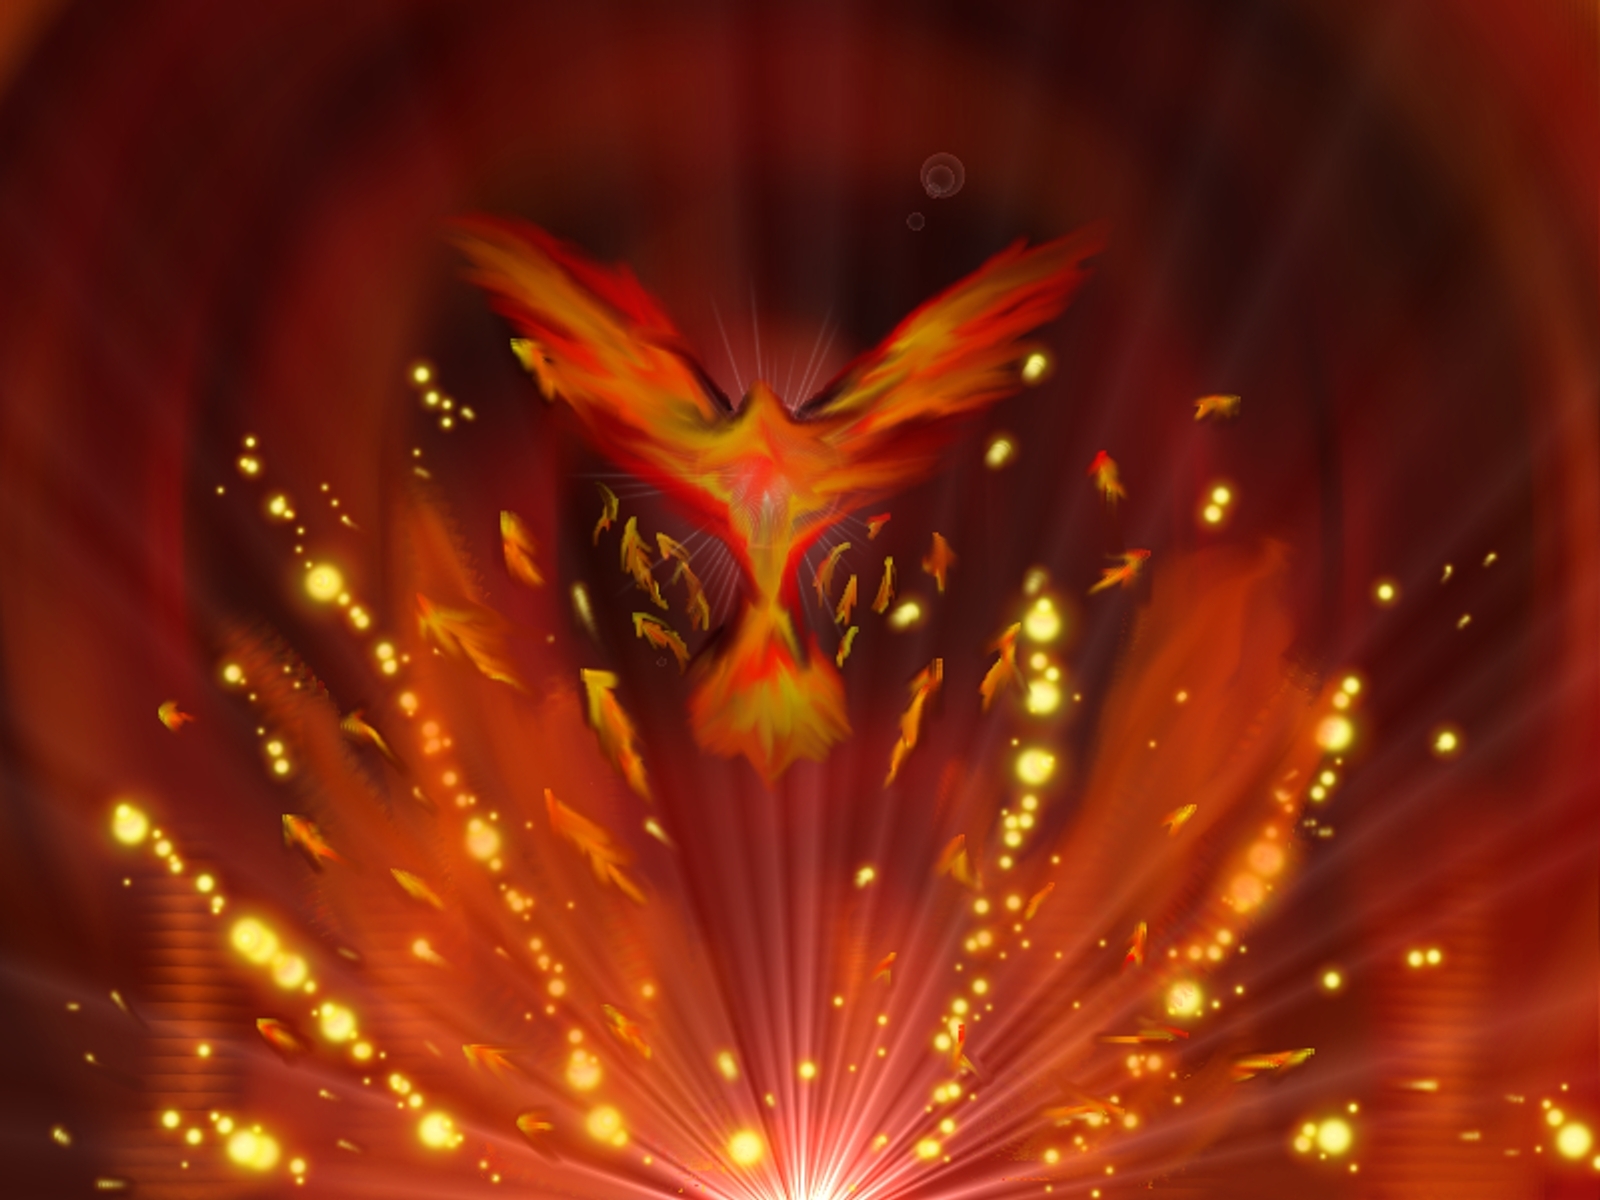 rising phoenix wallpaper 06